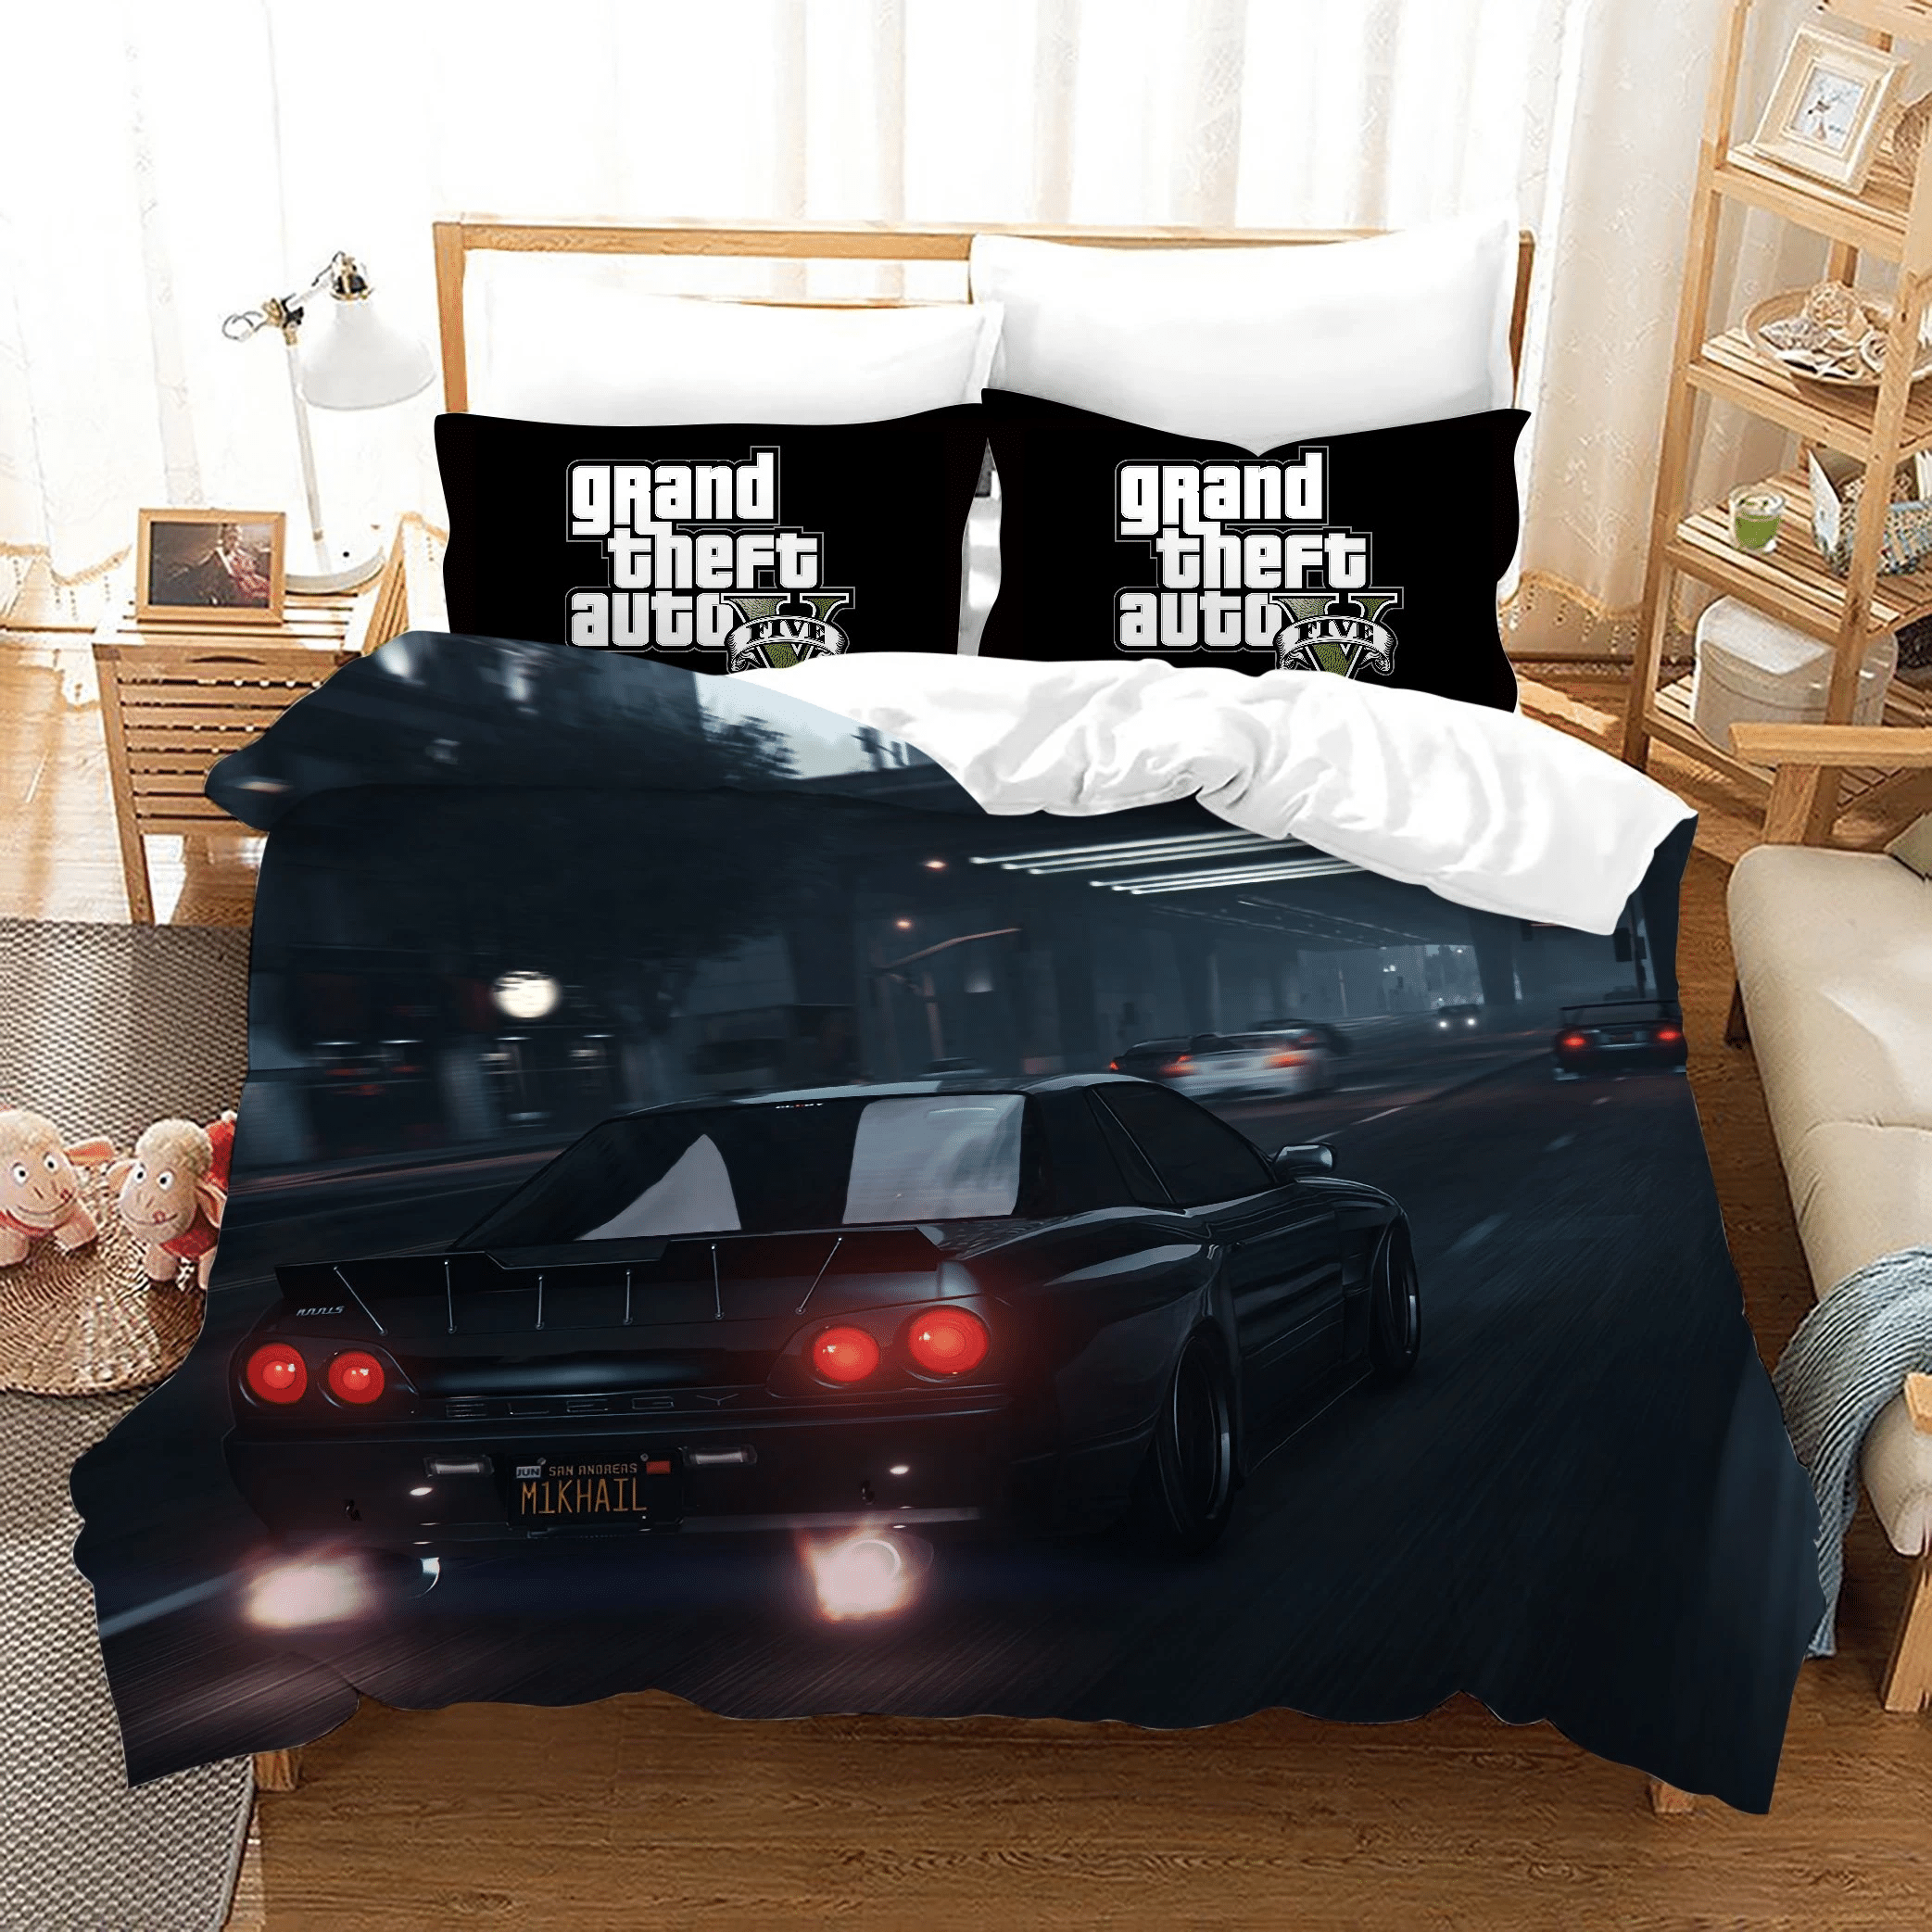 Grand Theft Auto 21 Duvet Cover Pillowcase Bedding Sets Home